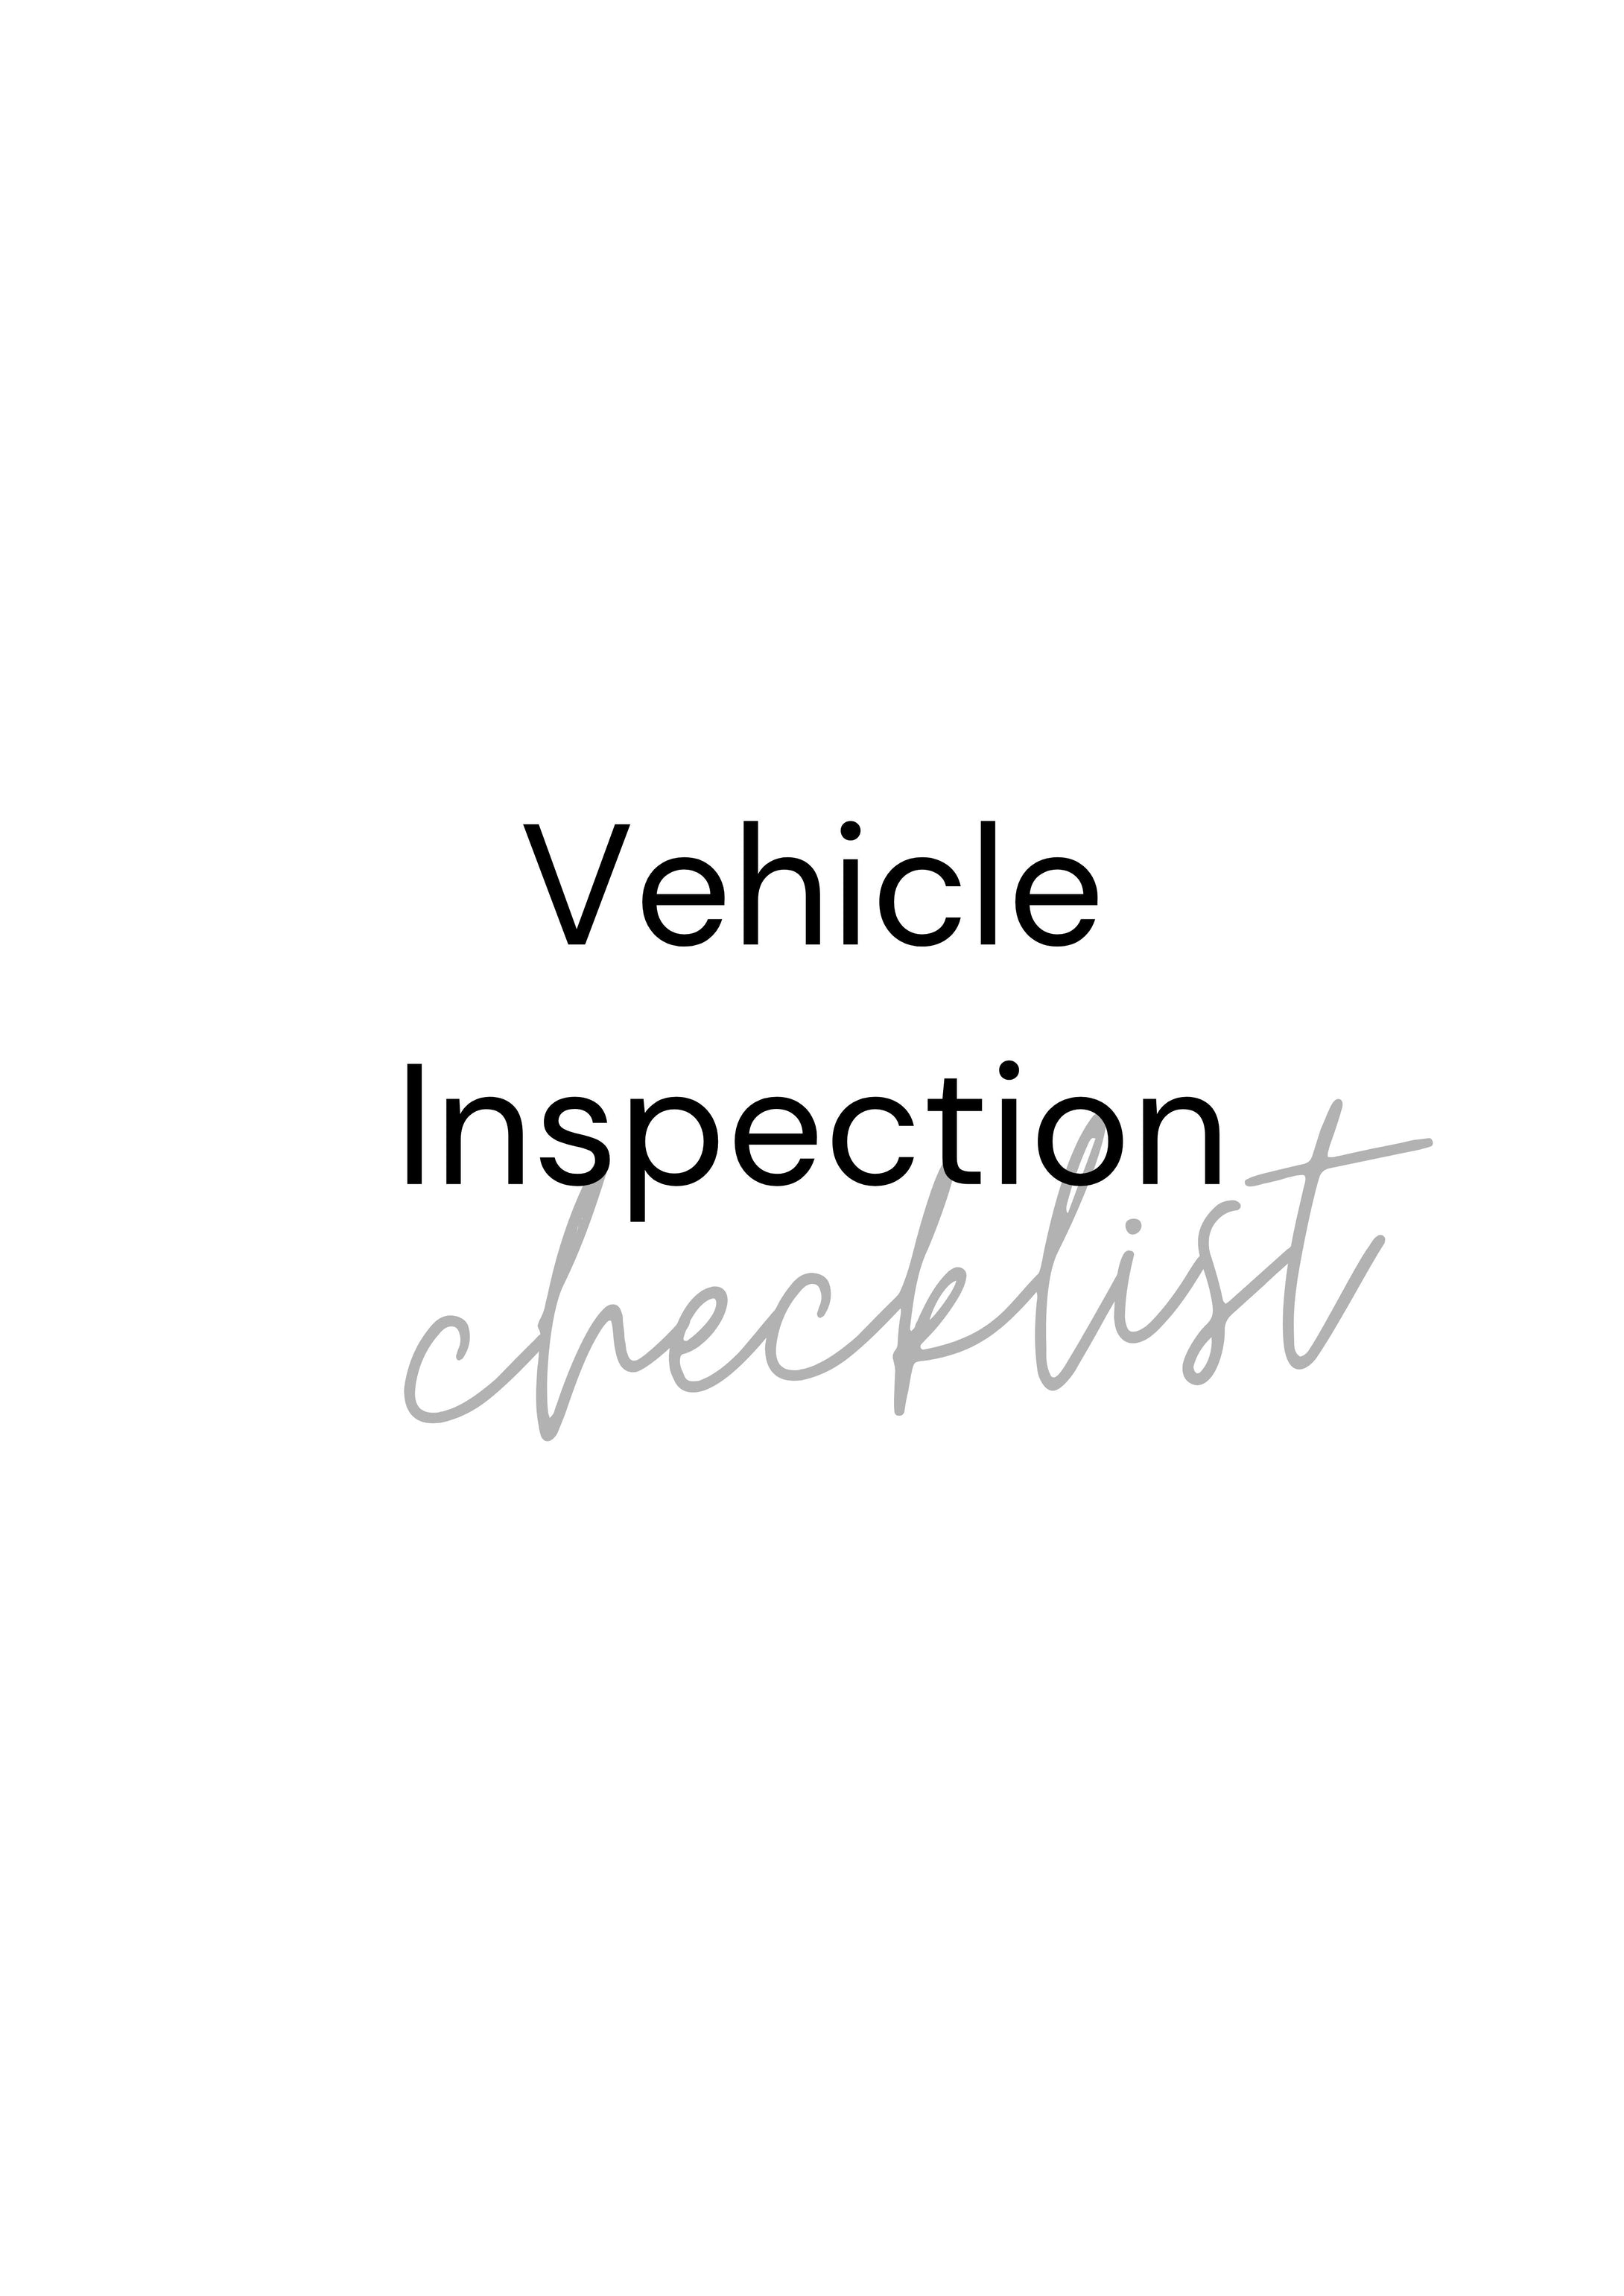 Vehicle Inspection Checklist - DIGITAL DOWNLOAD